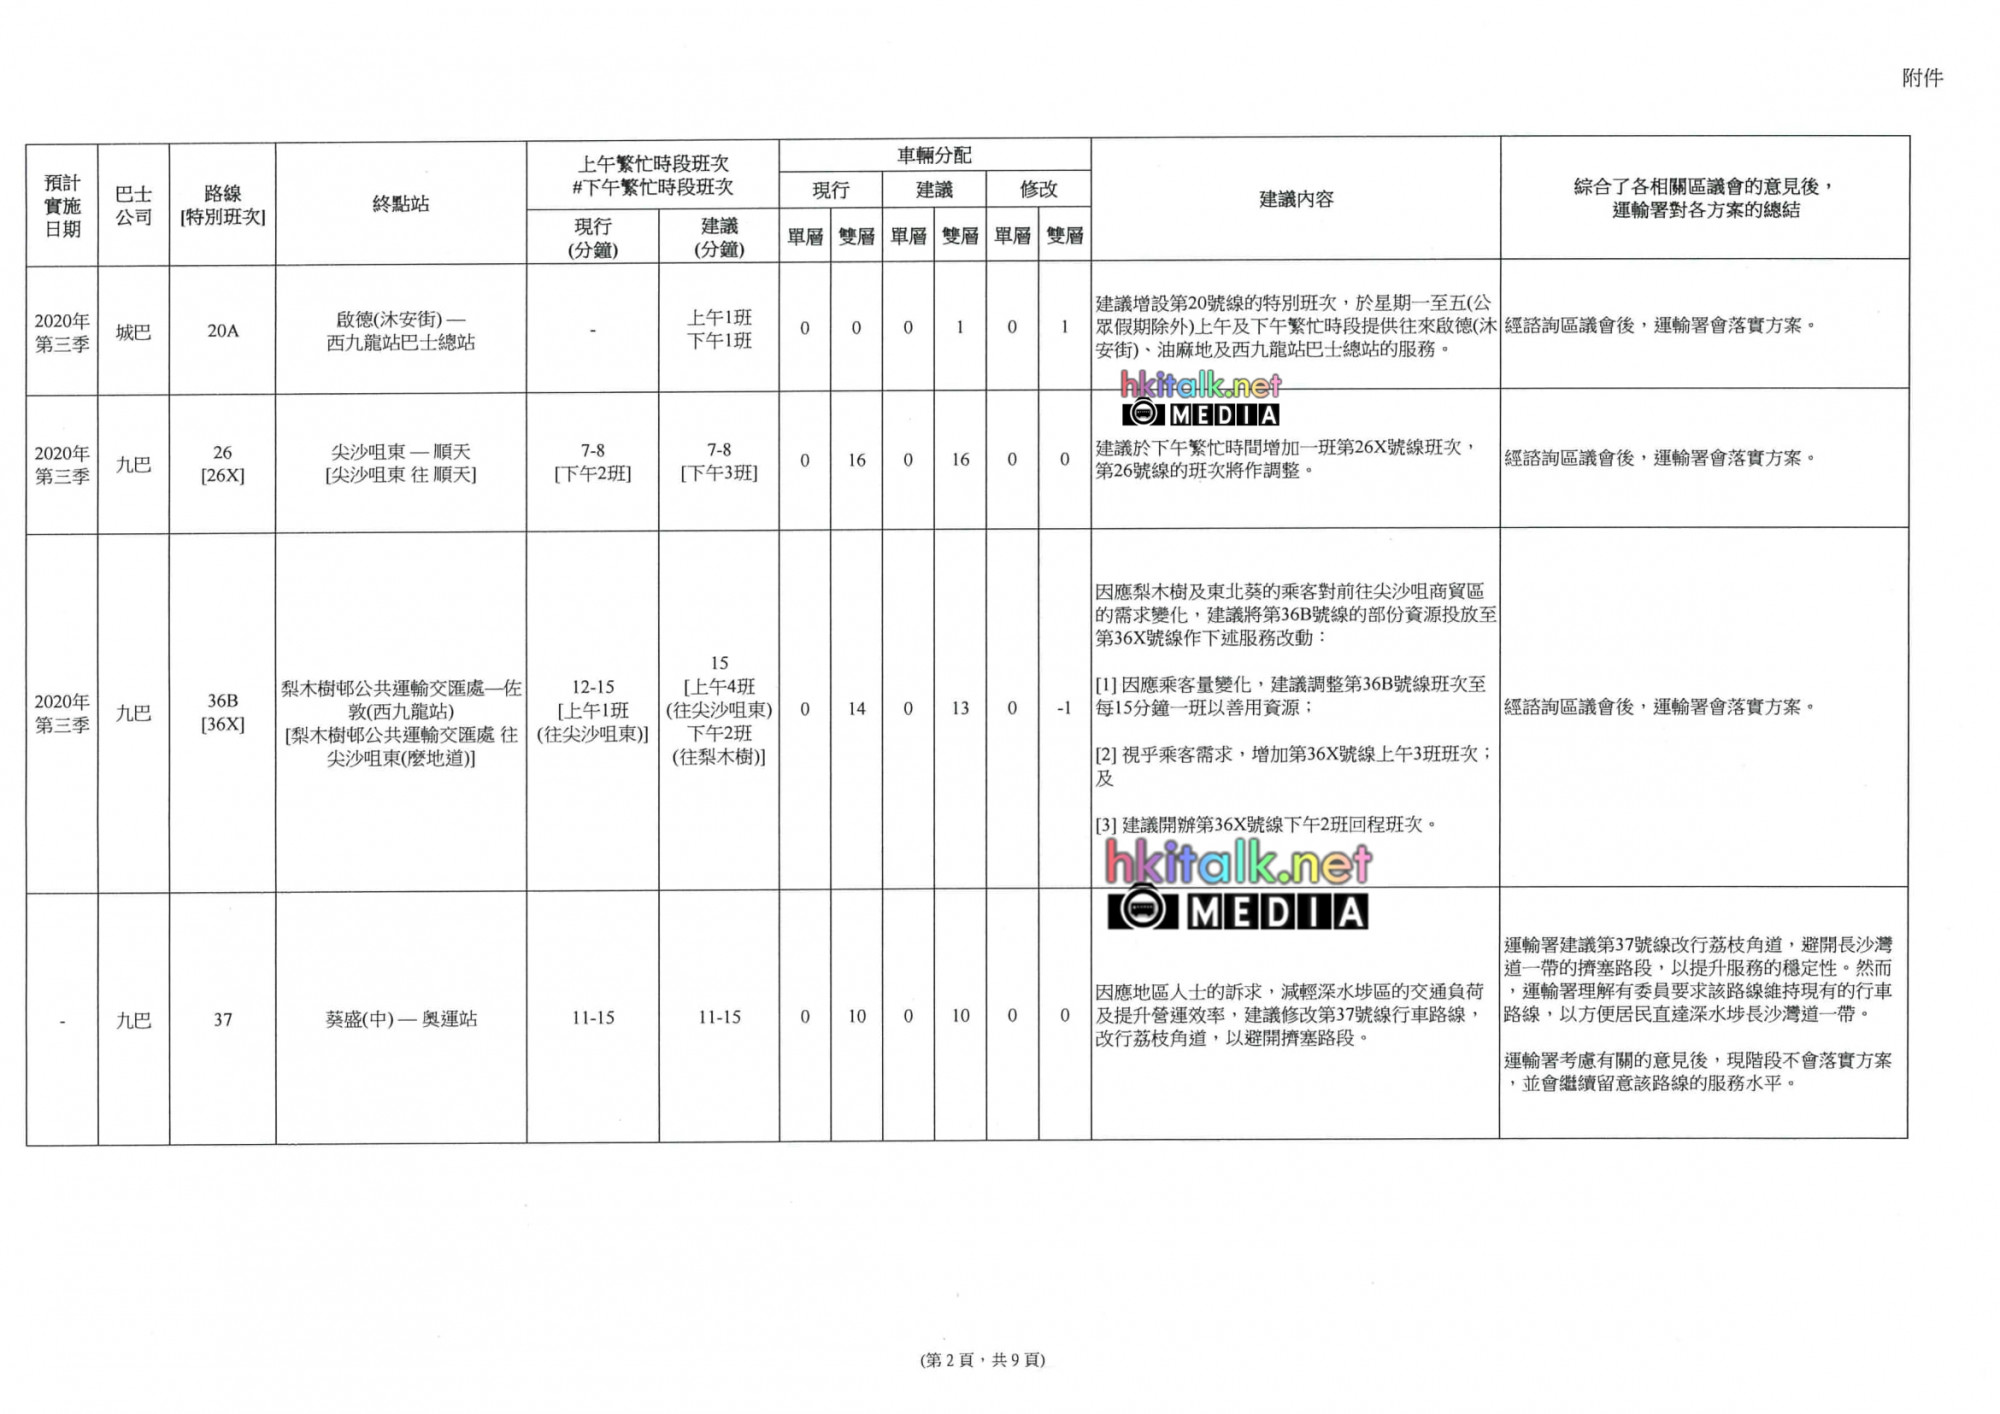 Route Planning Programme 2020-2021 for Yau Tsim Mong-03.jpg